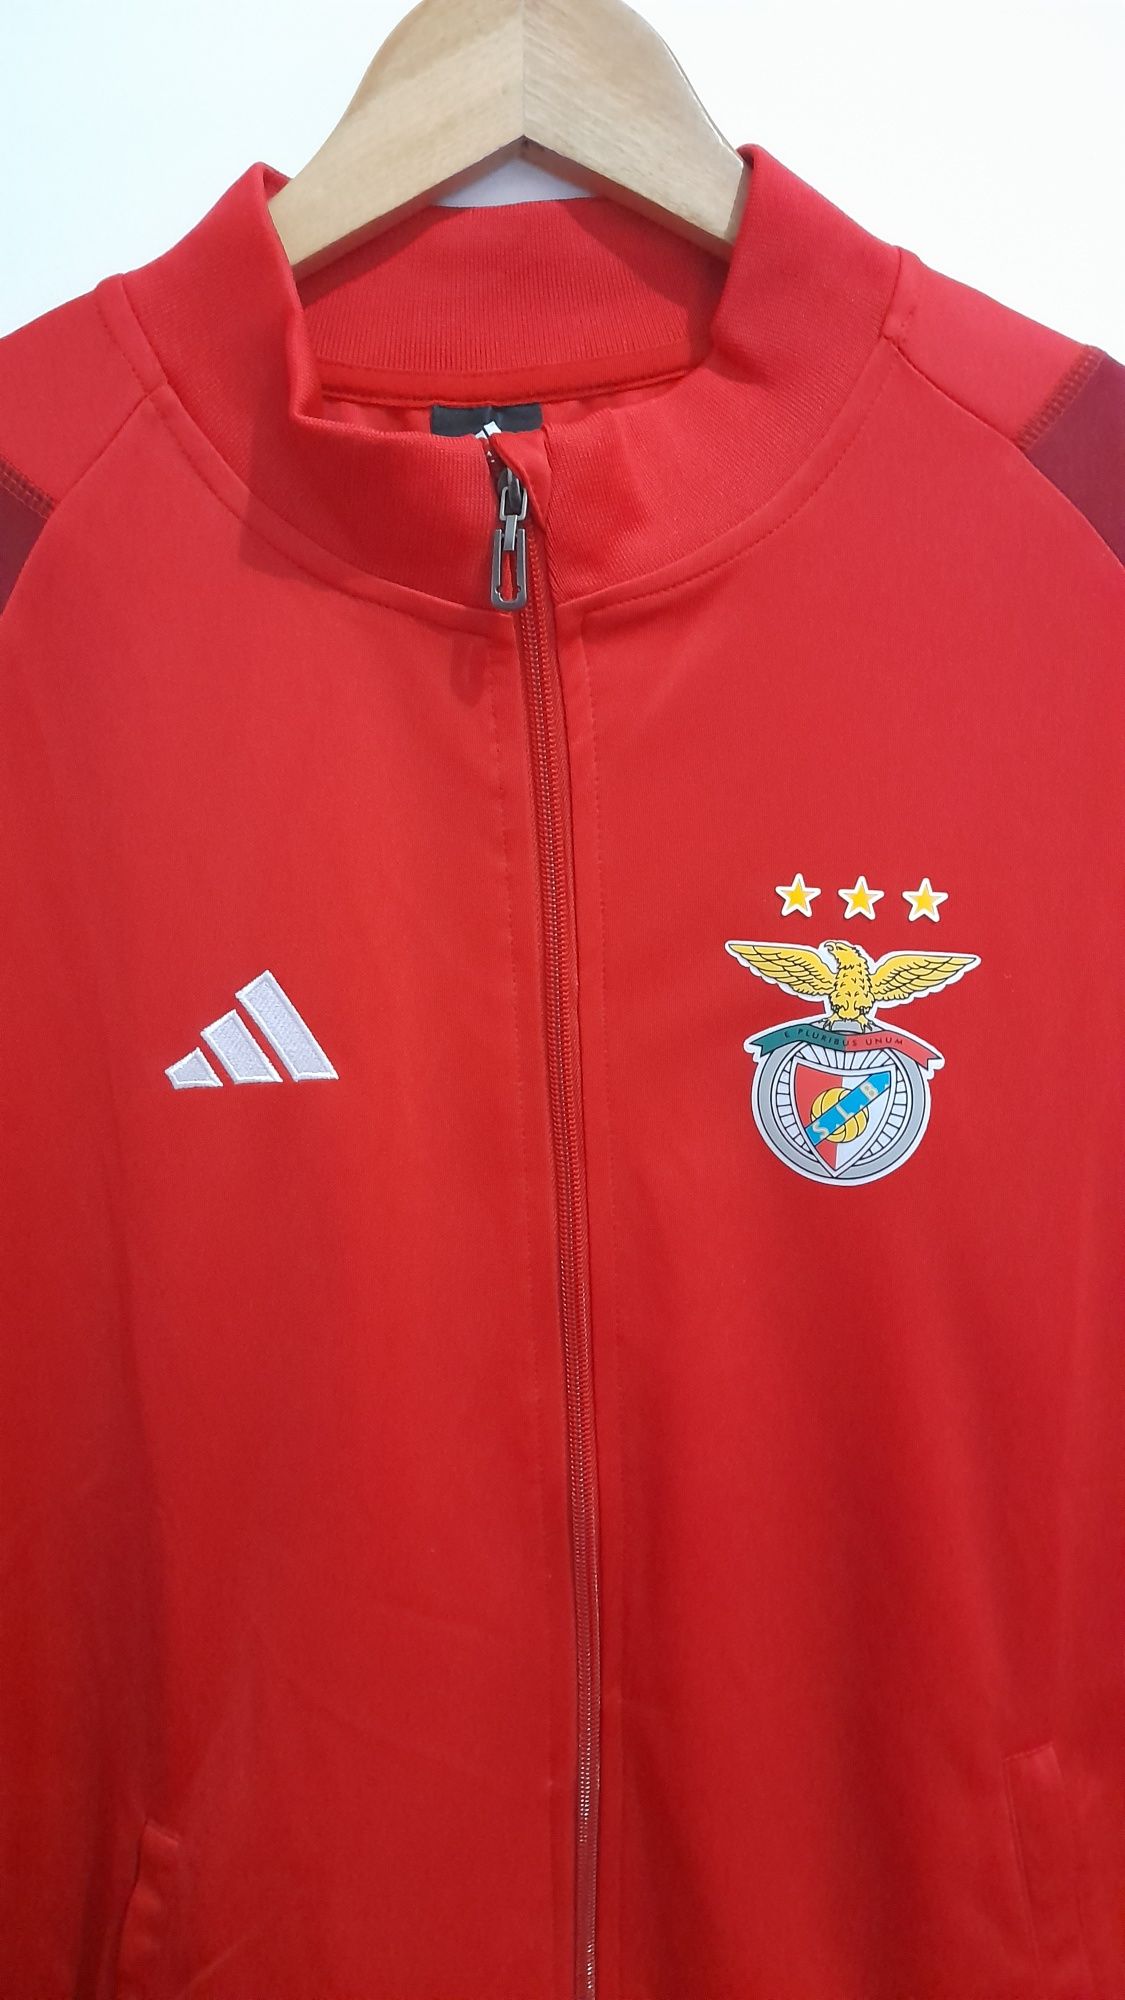 Fato treino Benfica (casaco + calças) -Portes incluídos-